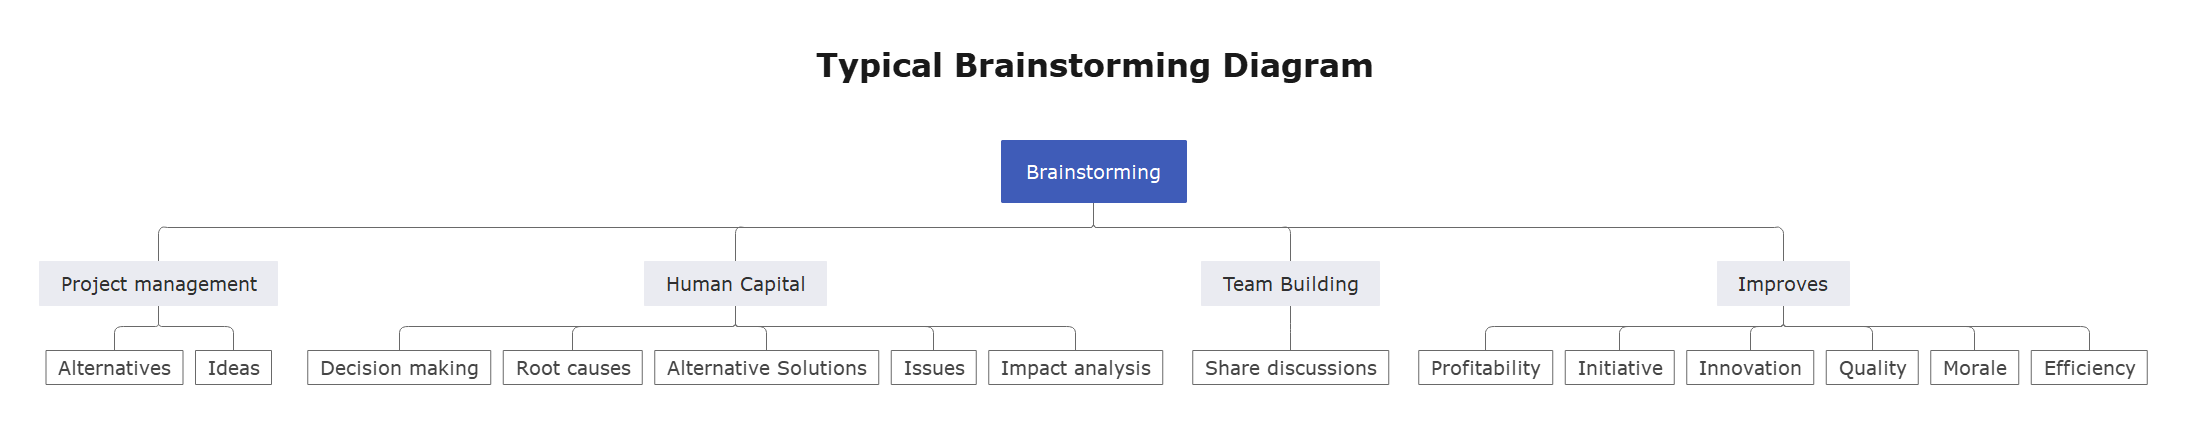 brainstorming diagram example 1